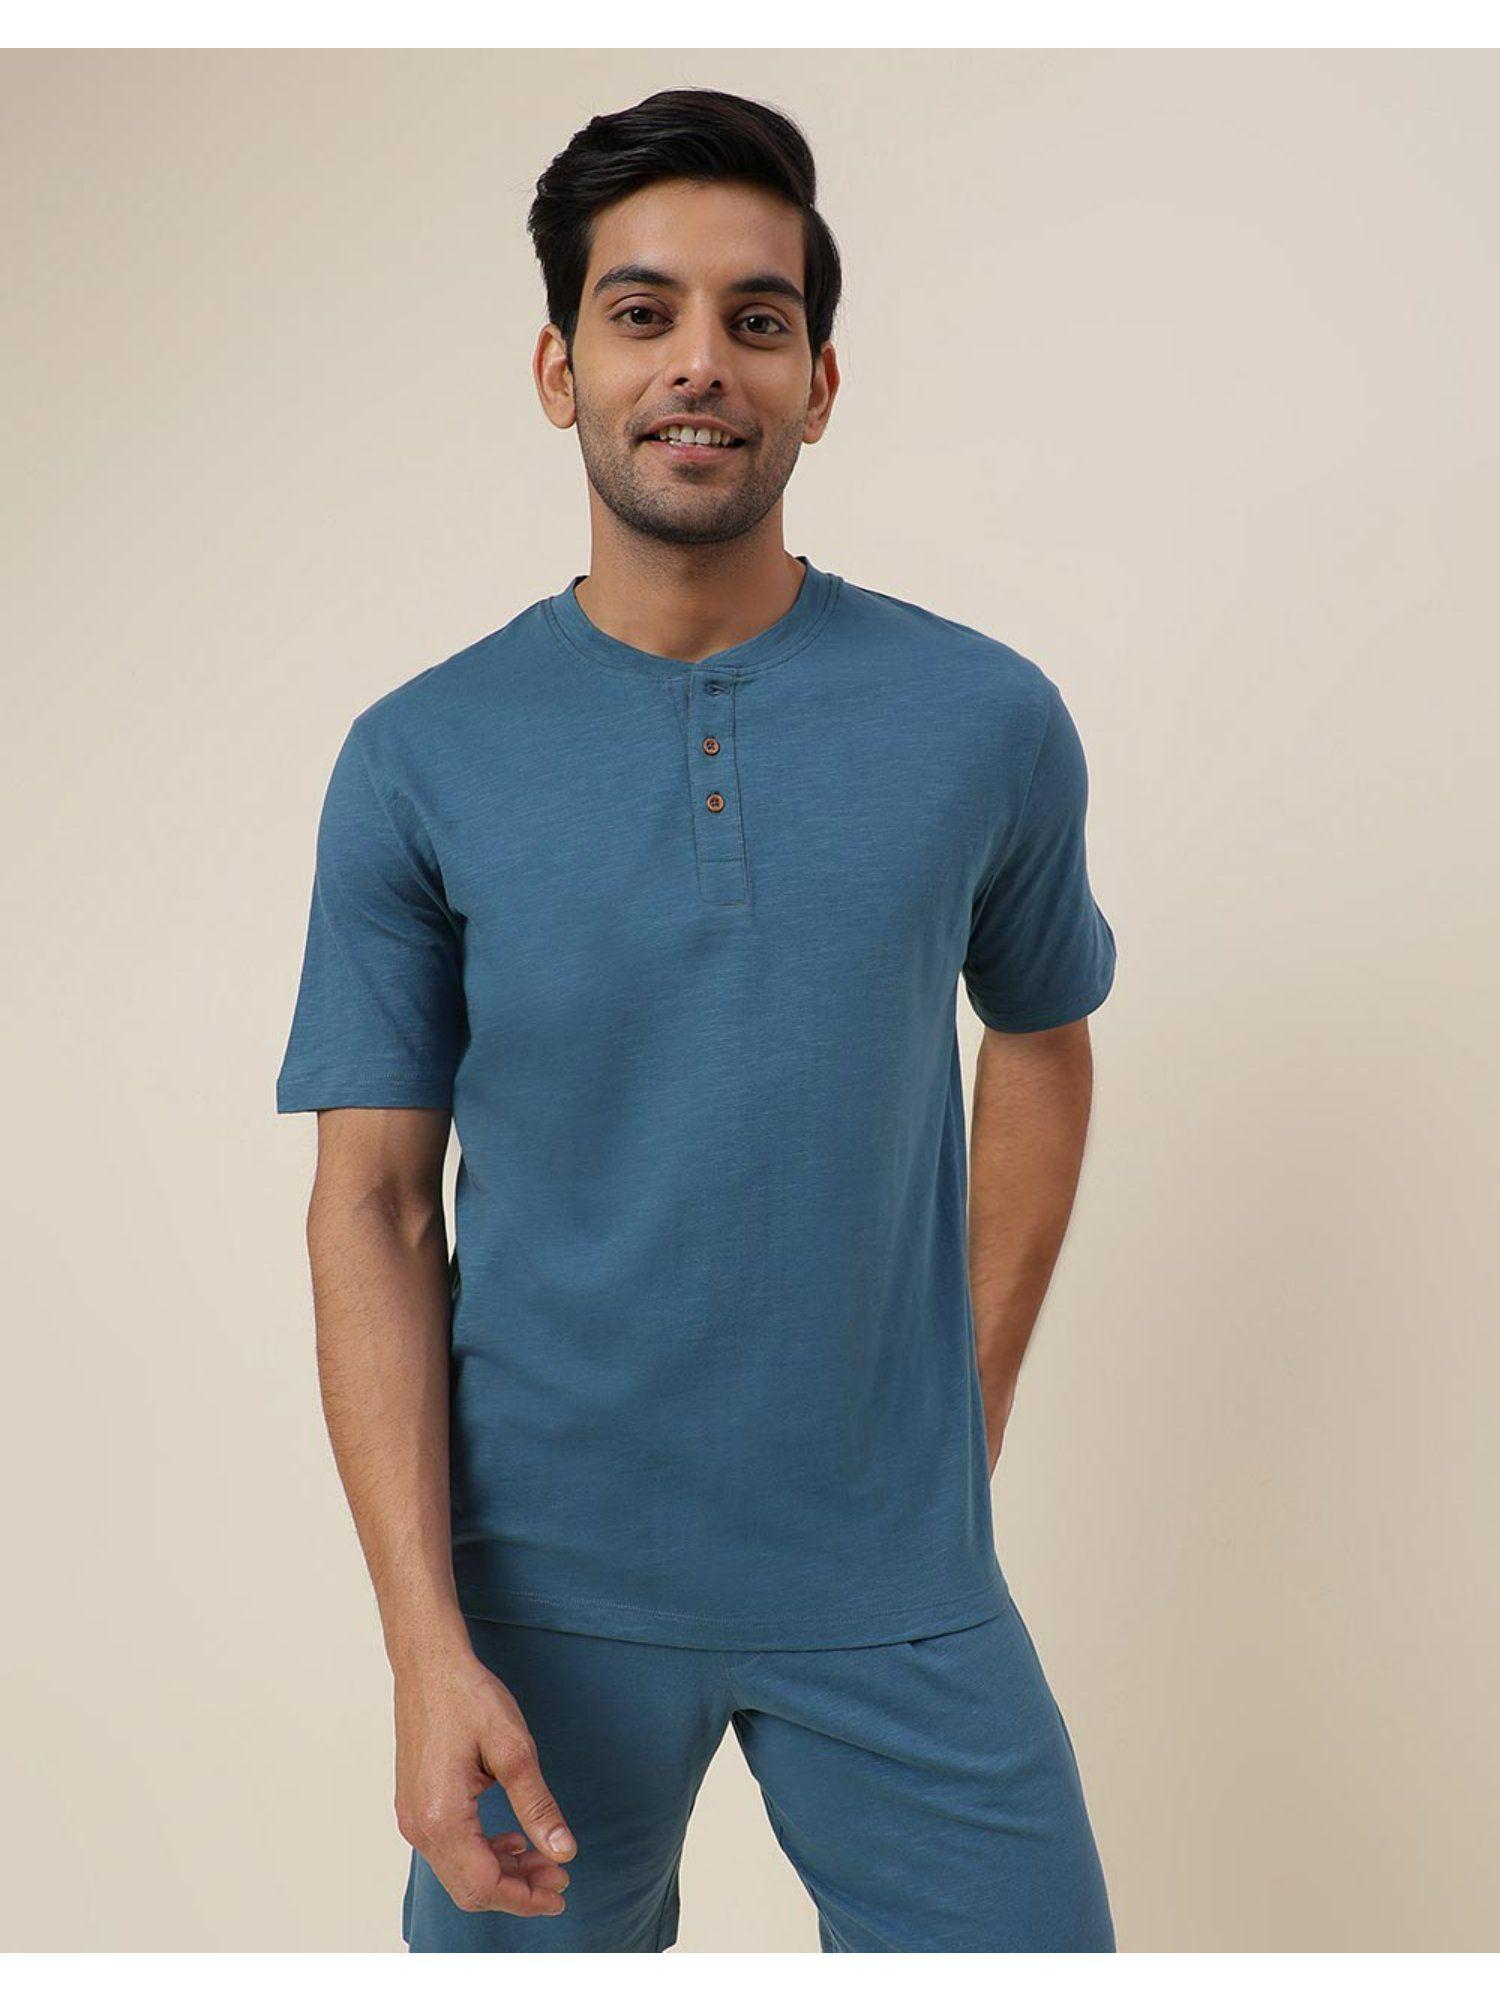 blue organic cotton knit t-shirt